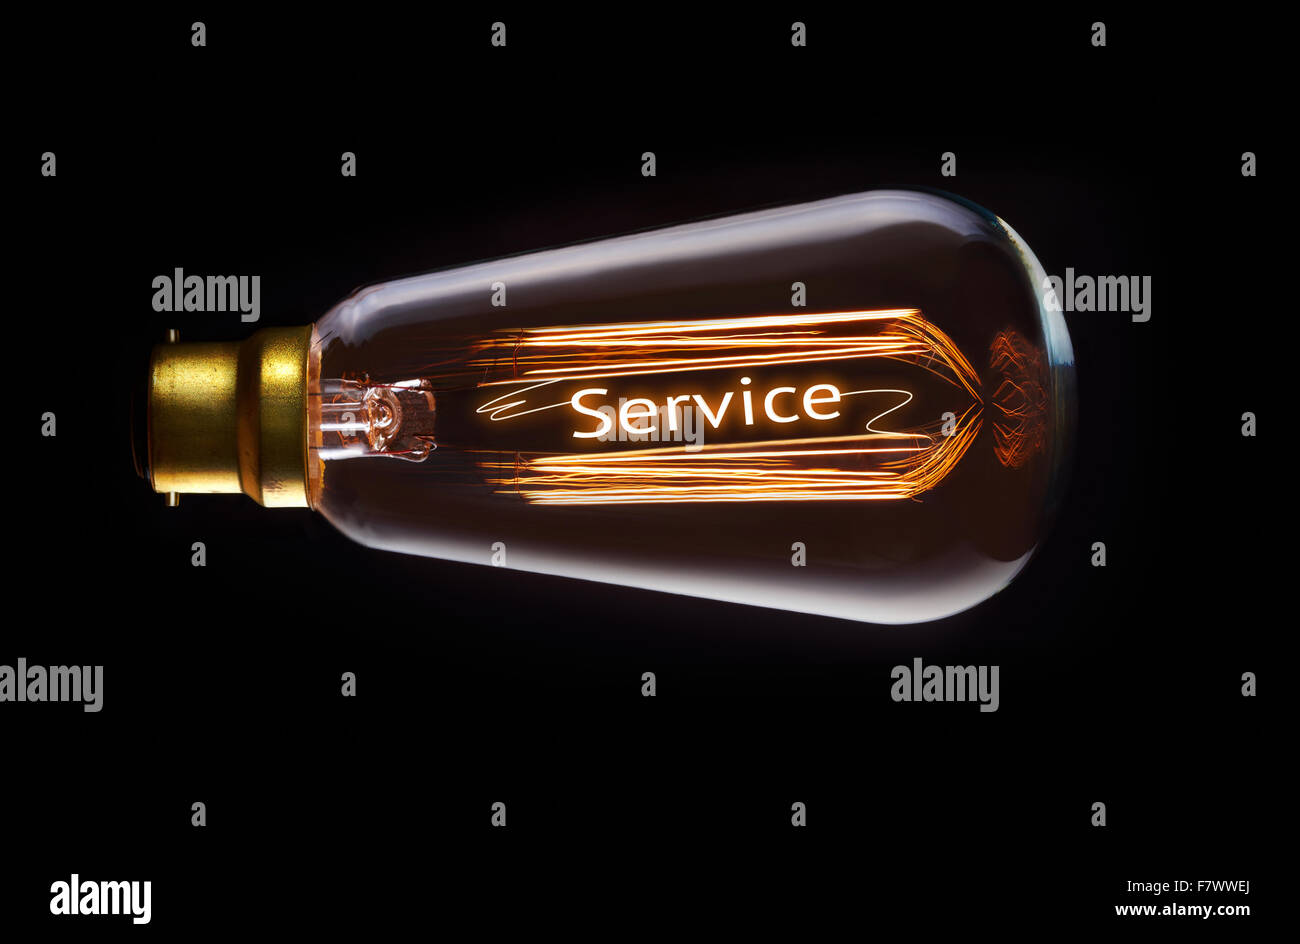 Customer Service concept in a filament lightbulb. Stock Photo